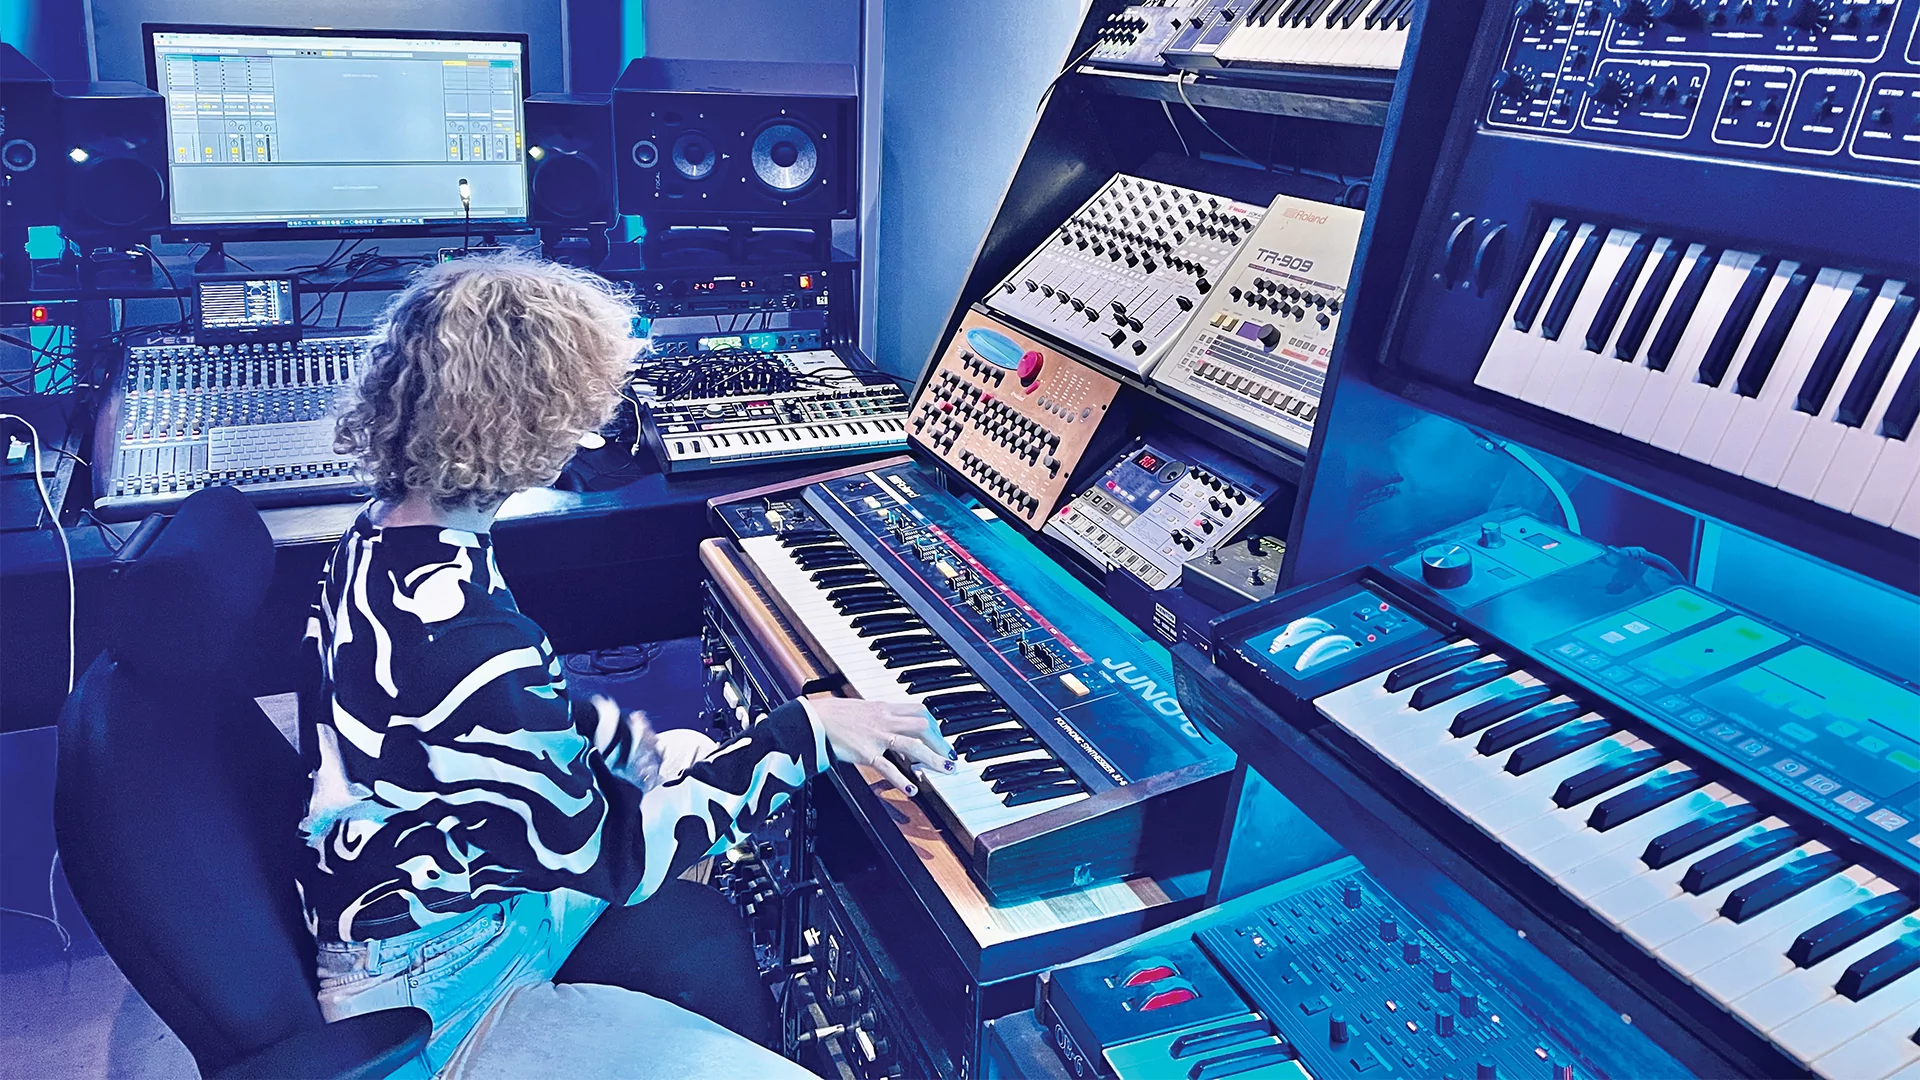 Tigerbalm producing in a blue-lit studio.